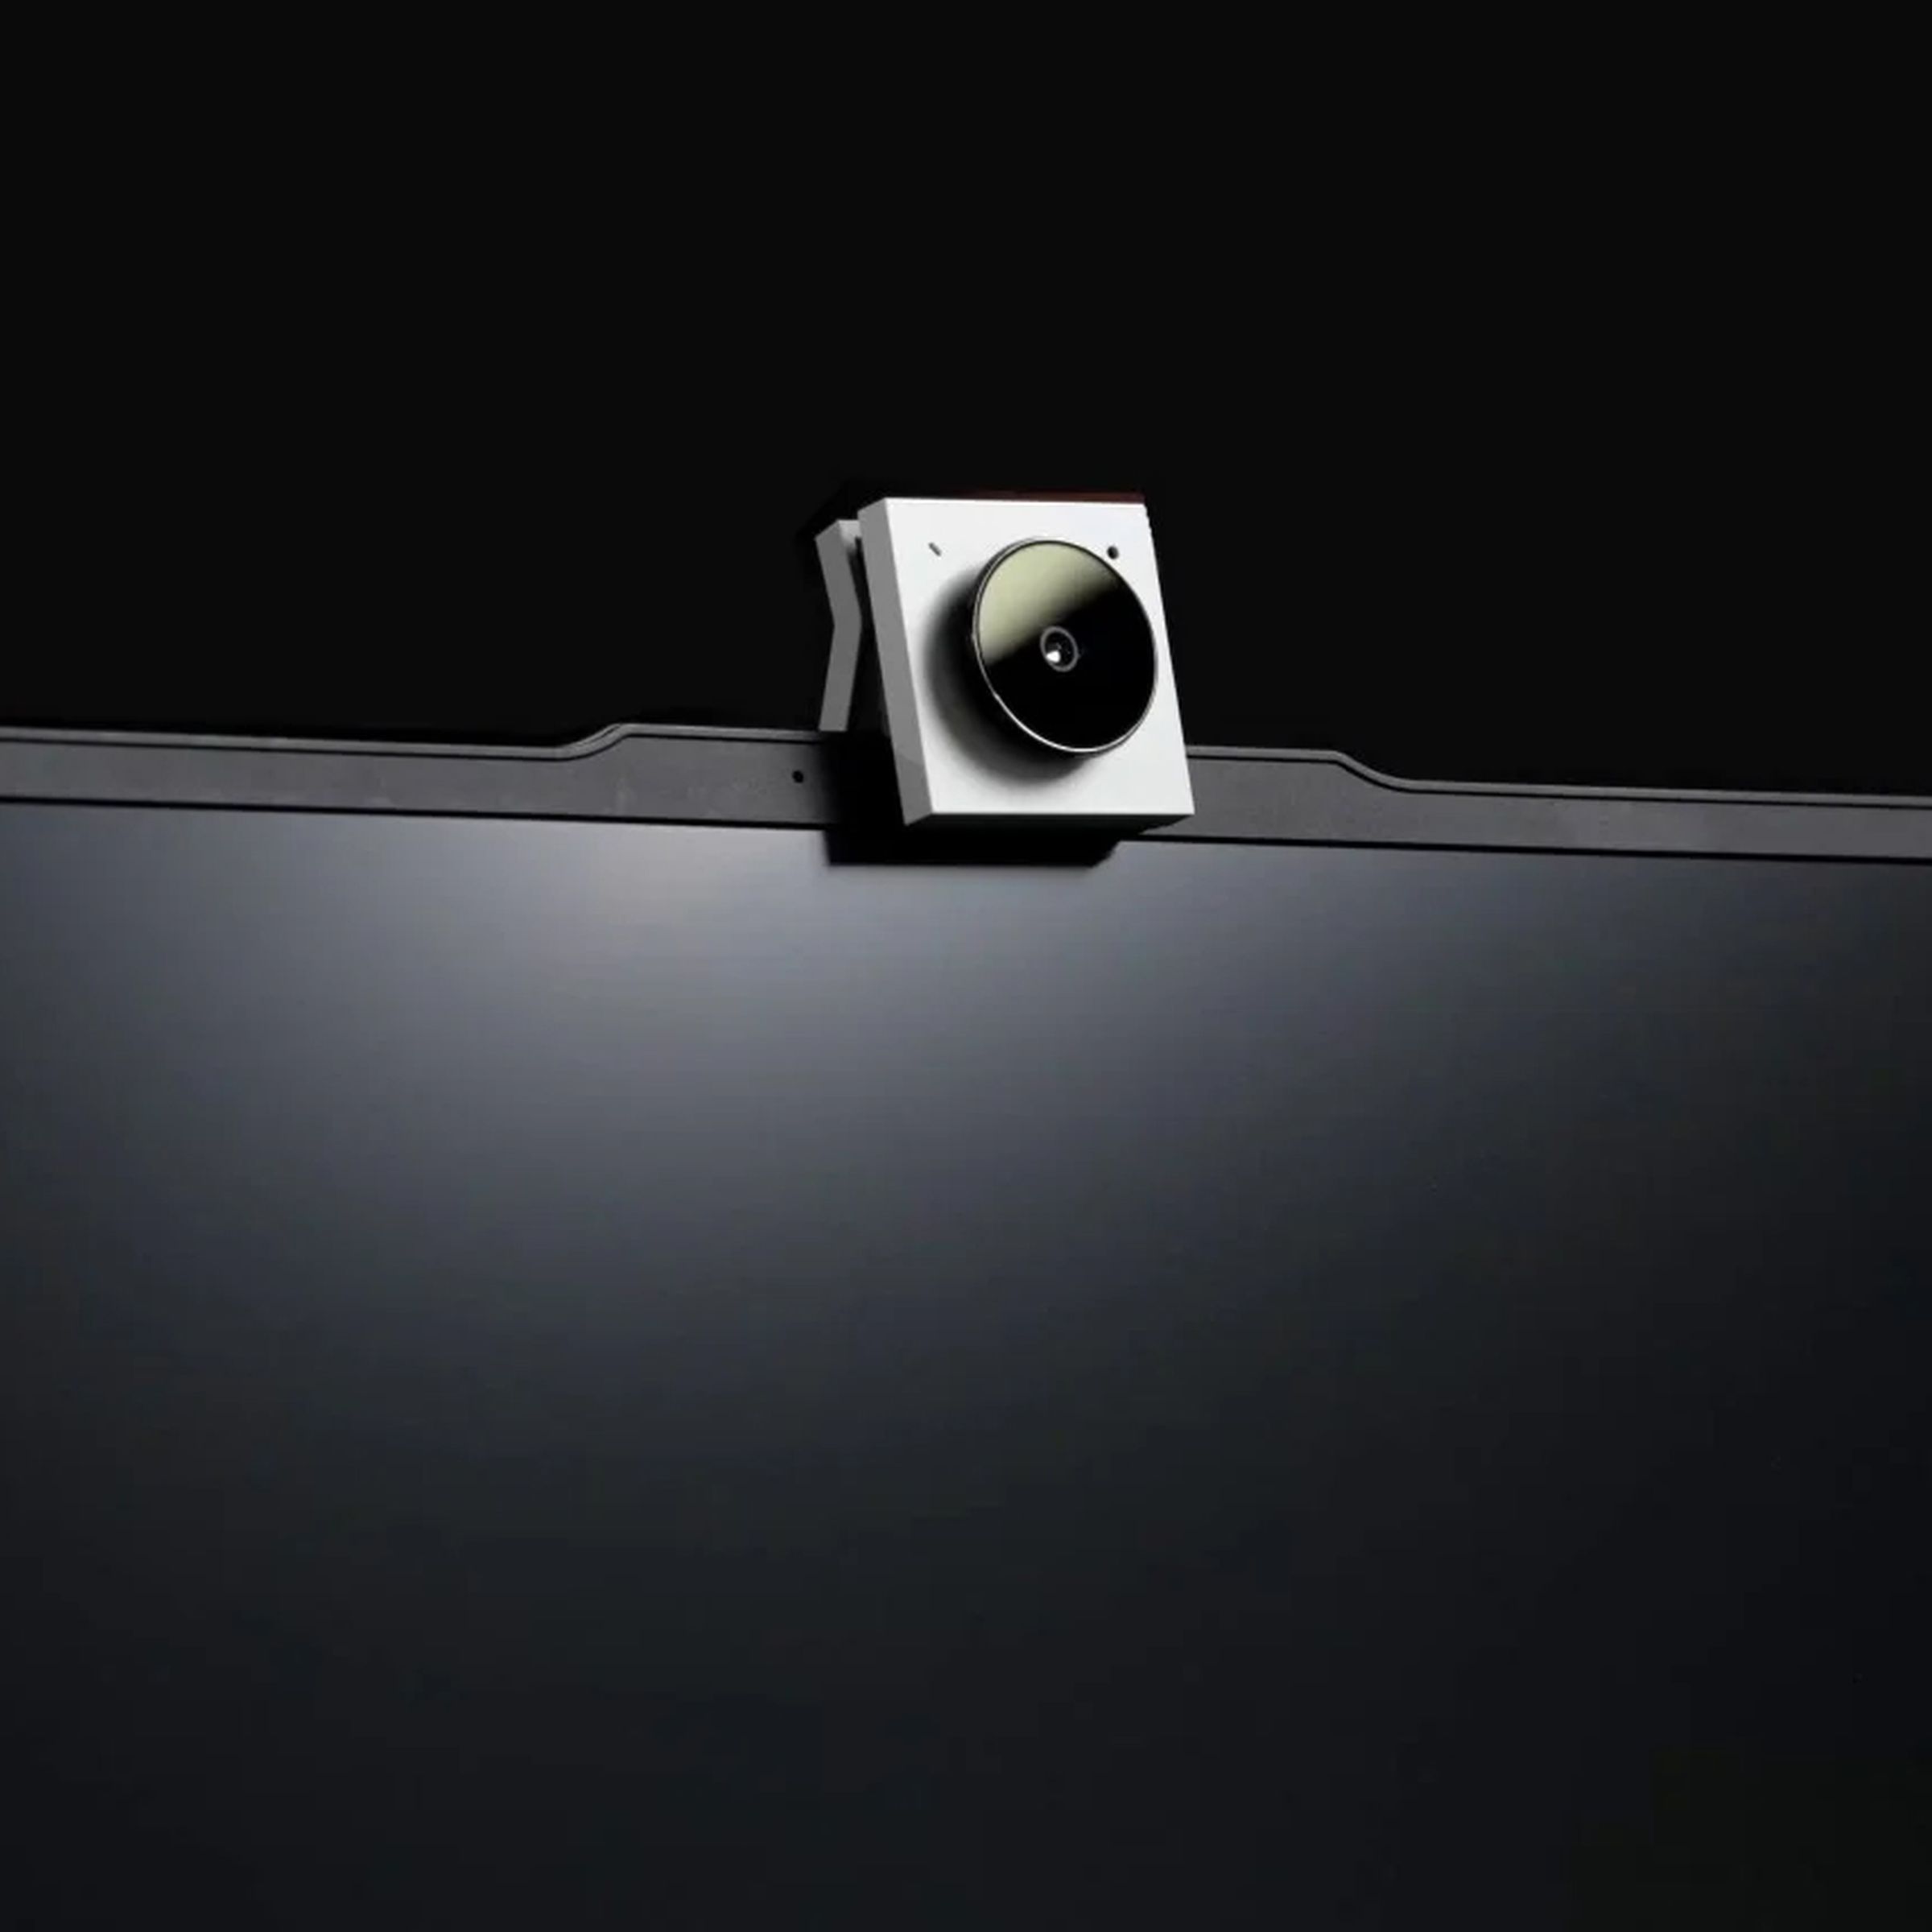 A white Opal Tadpole webcam sitting atop a black laptop against a black background.